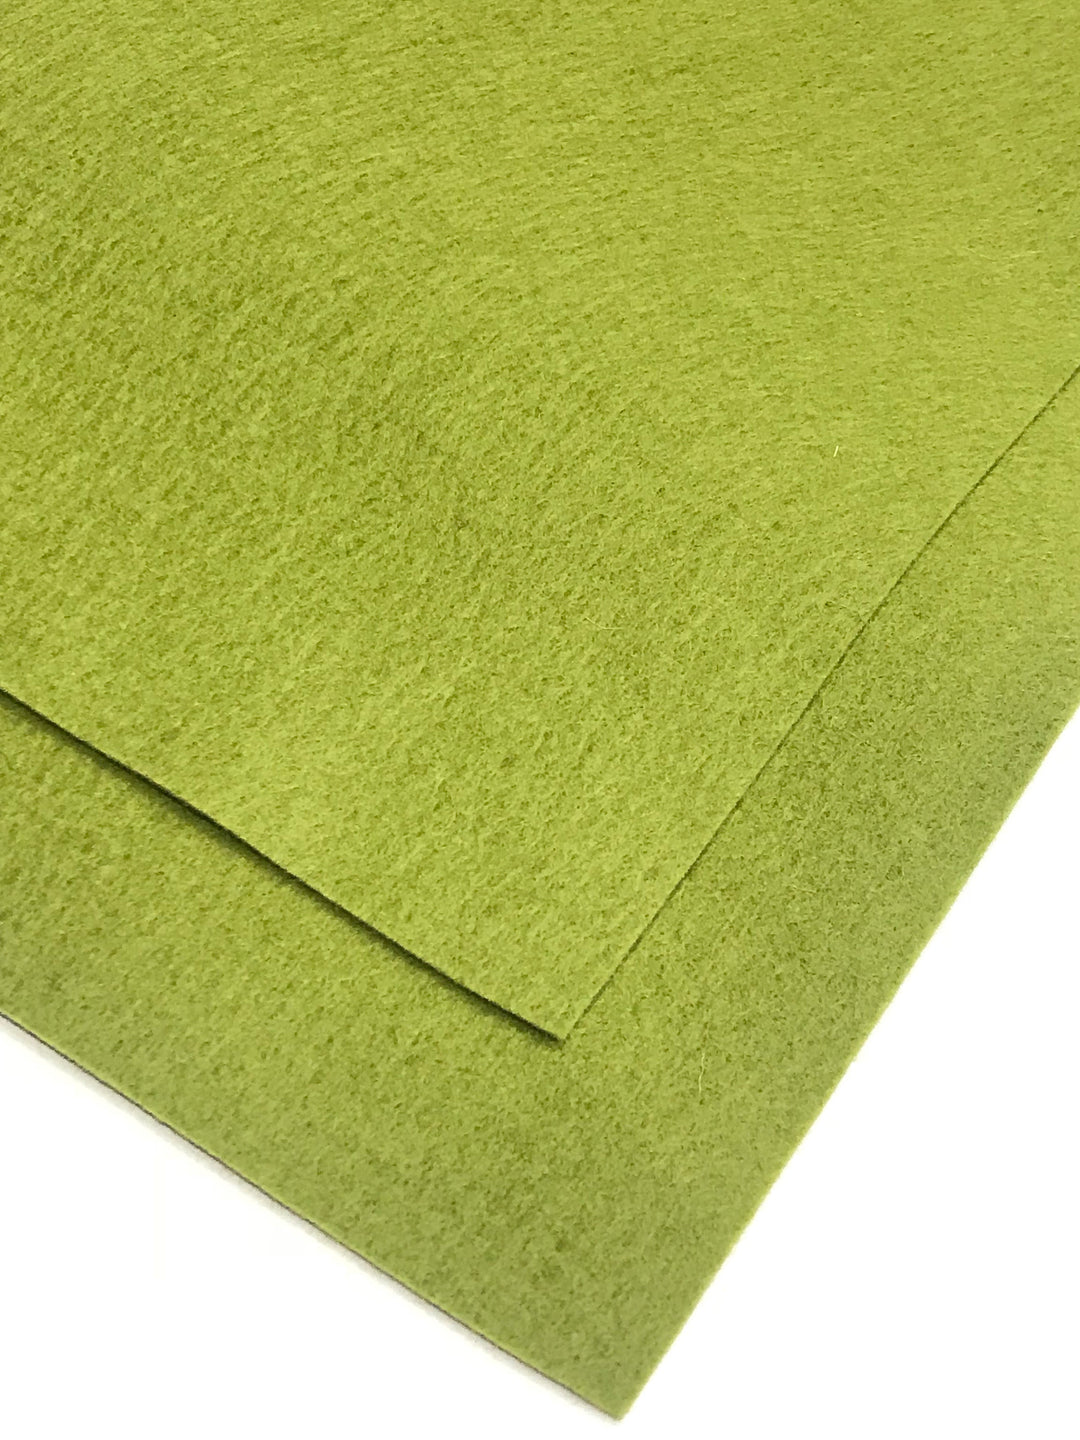 1mm Olive Green Merino Wool Felt 8 x 11" Sheet - No. 41